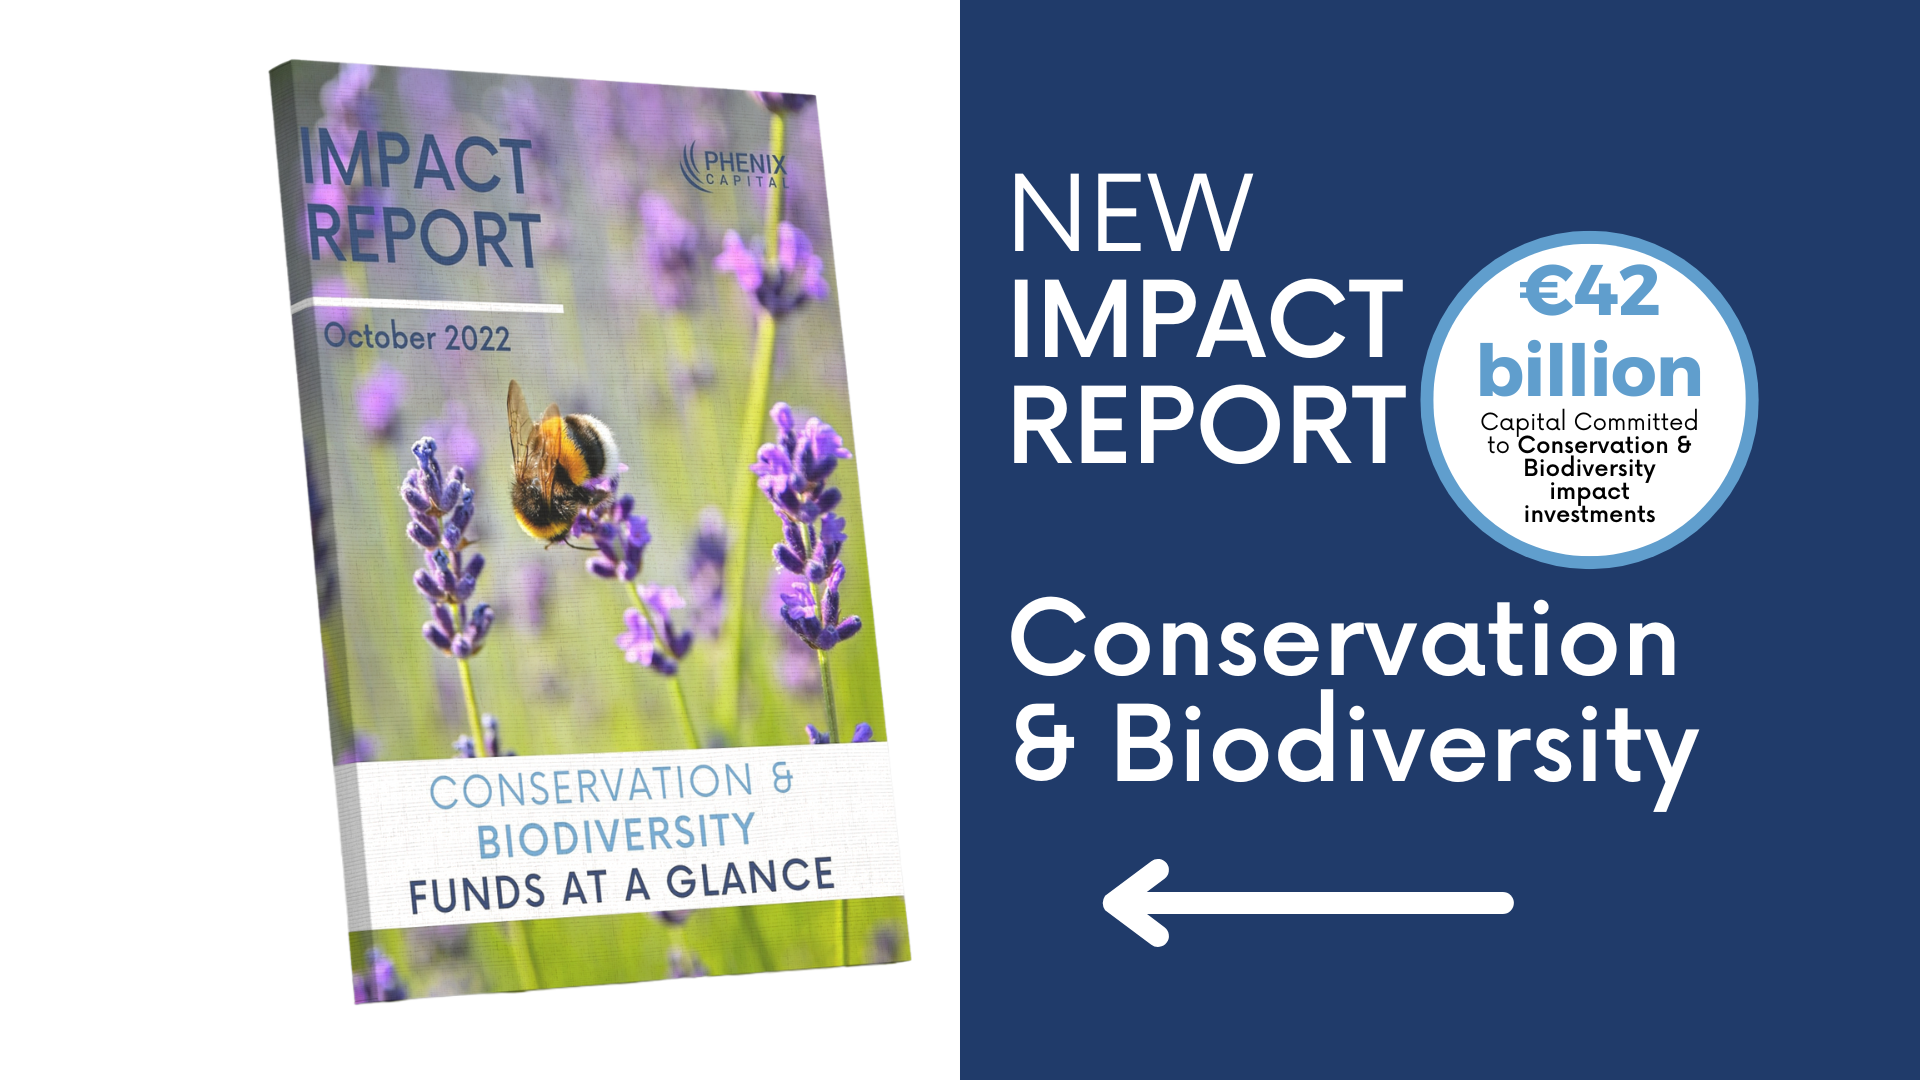 PRESS RELEASE: Conservation & Biodiversity